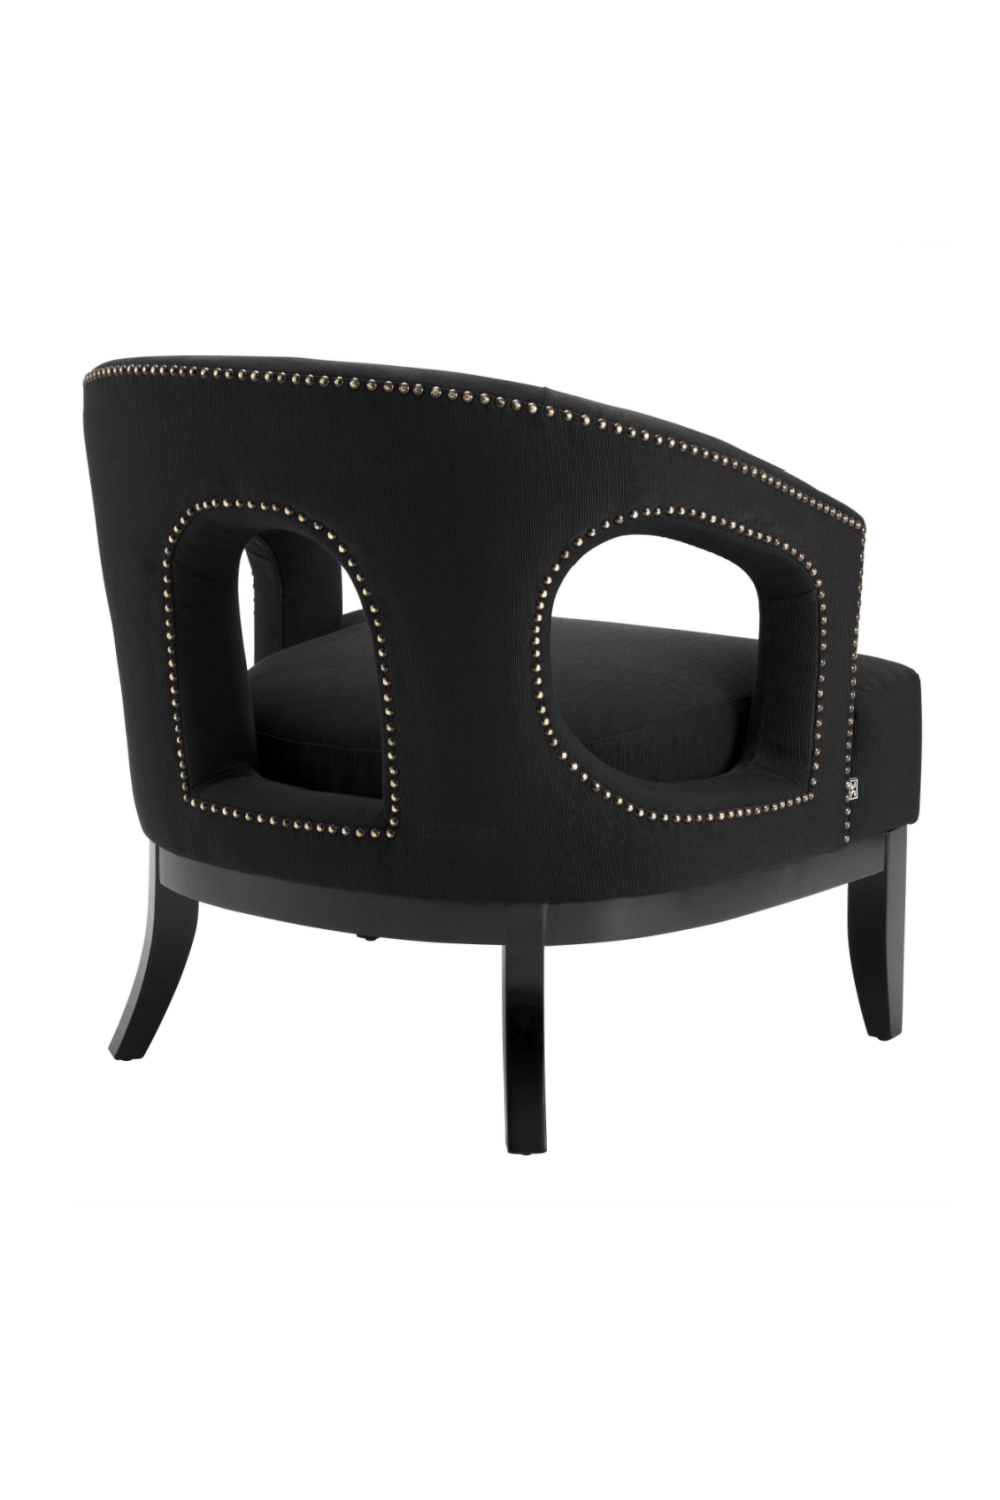 Studded Black Accent Chair | Eichholtz Adam | Oroa.com